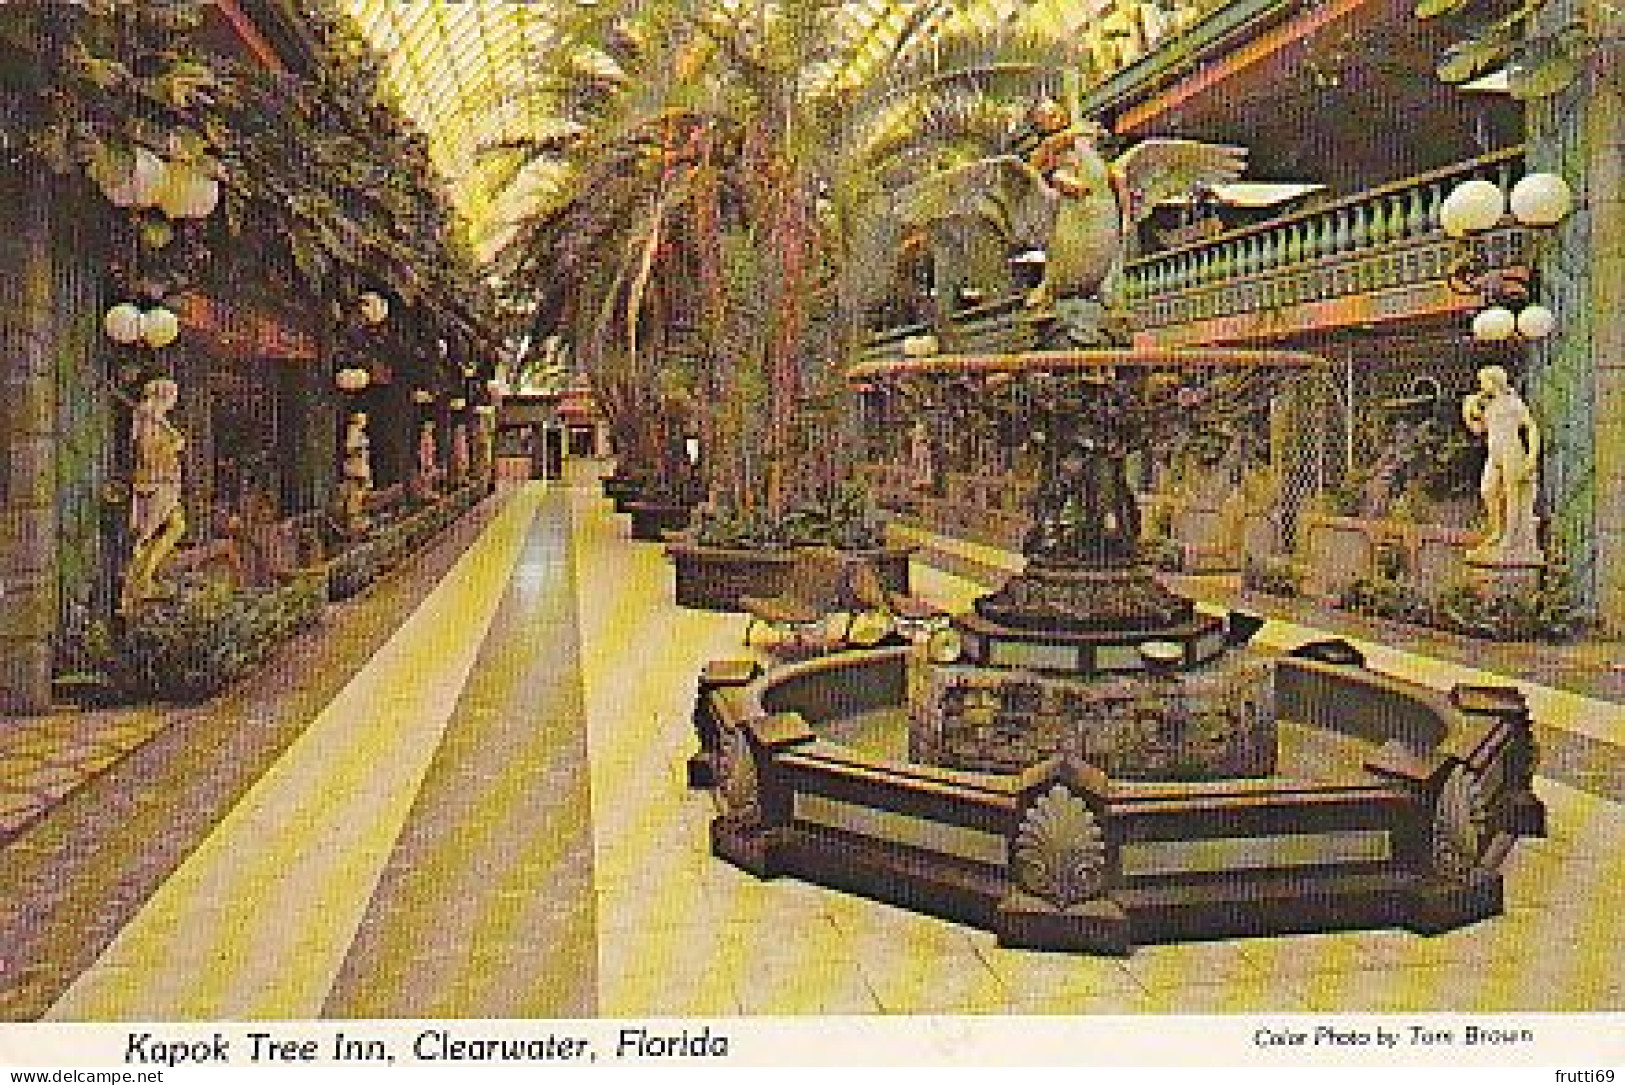 AK 194391 USA - Florida - Clearwater - Kapok Tree Inn Mall - Clearwater